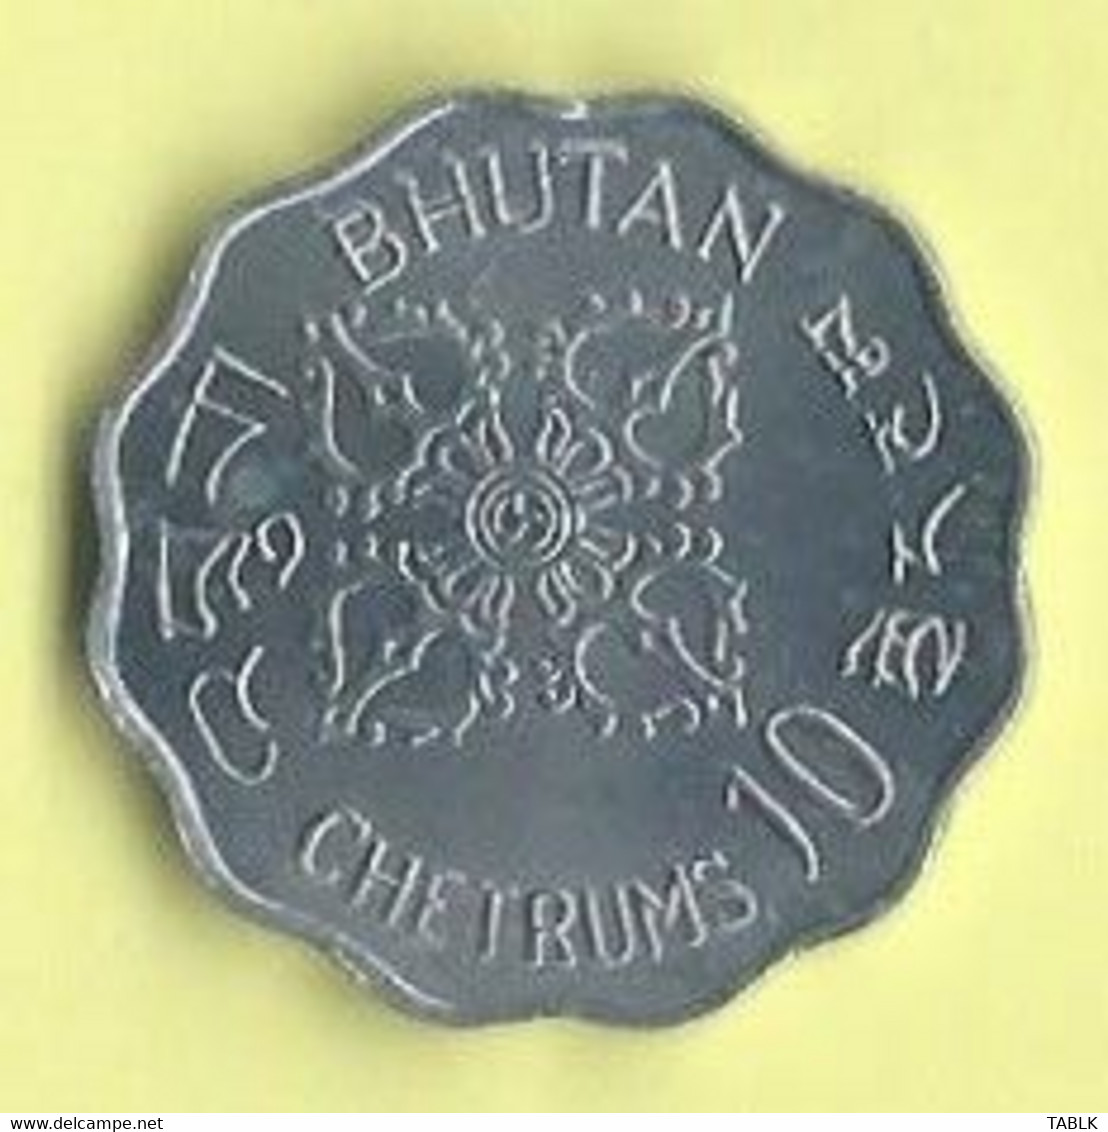 M019 - BHUTAN - 10 CHETRUMS 1975 - Bhutan